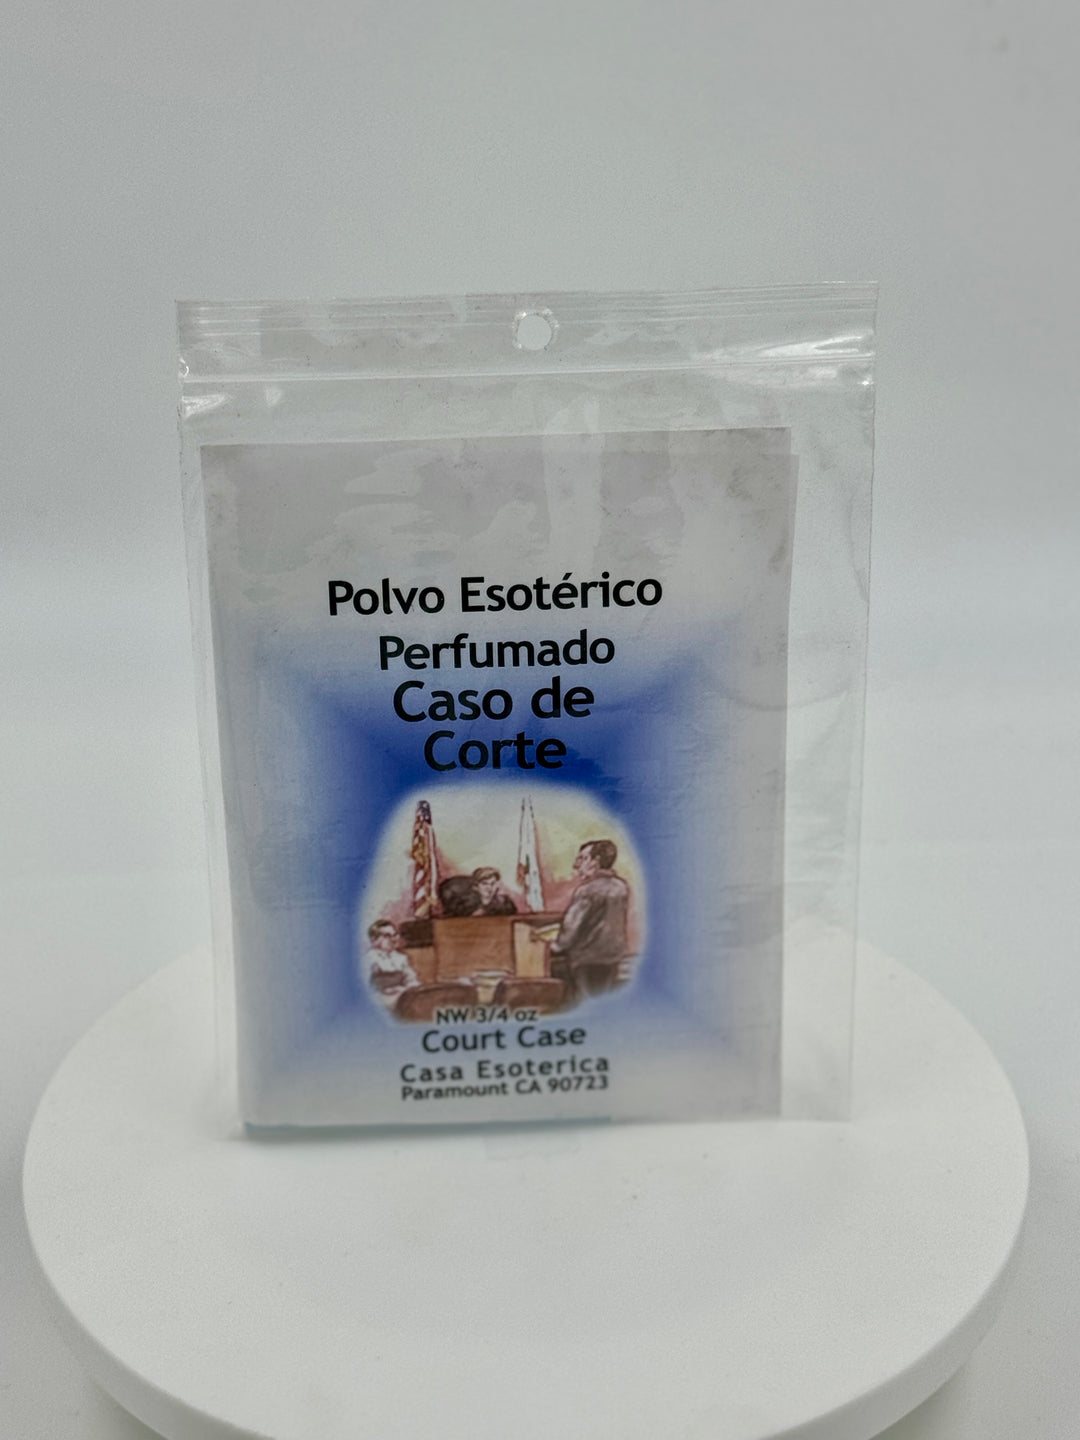 COURT CASE (CASO DE CORTE) -Powder/Polvo